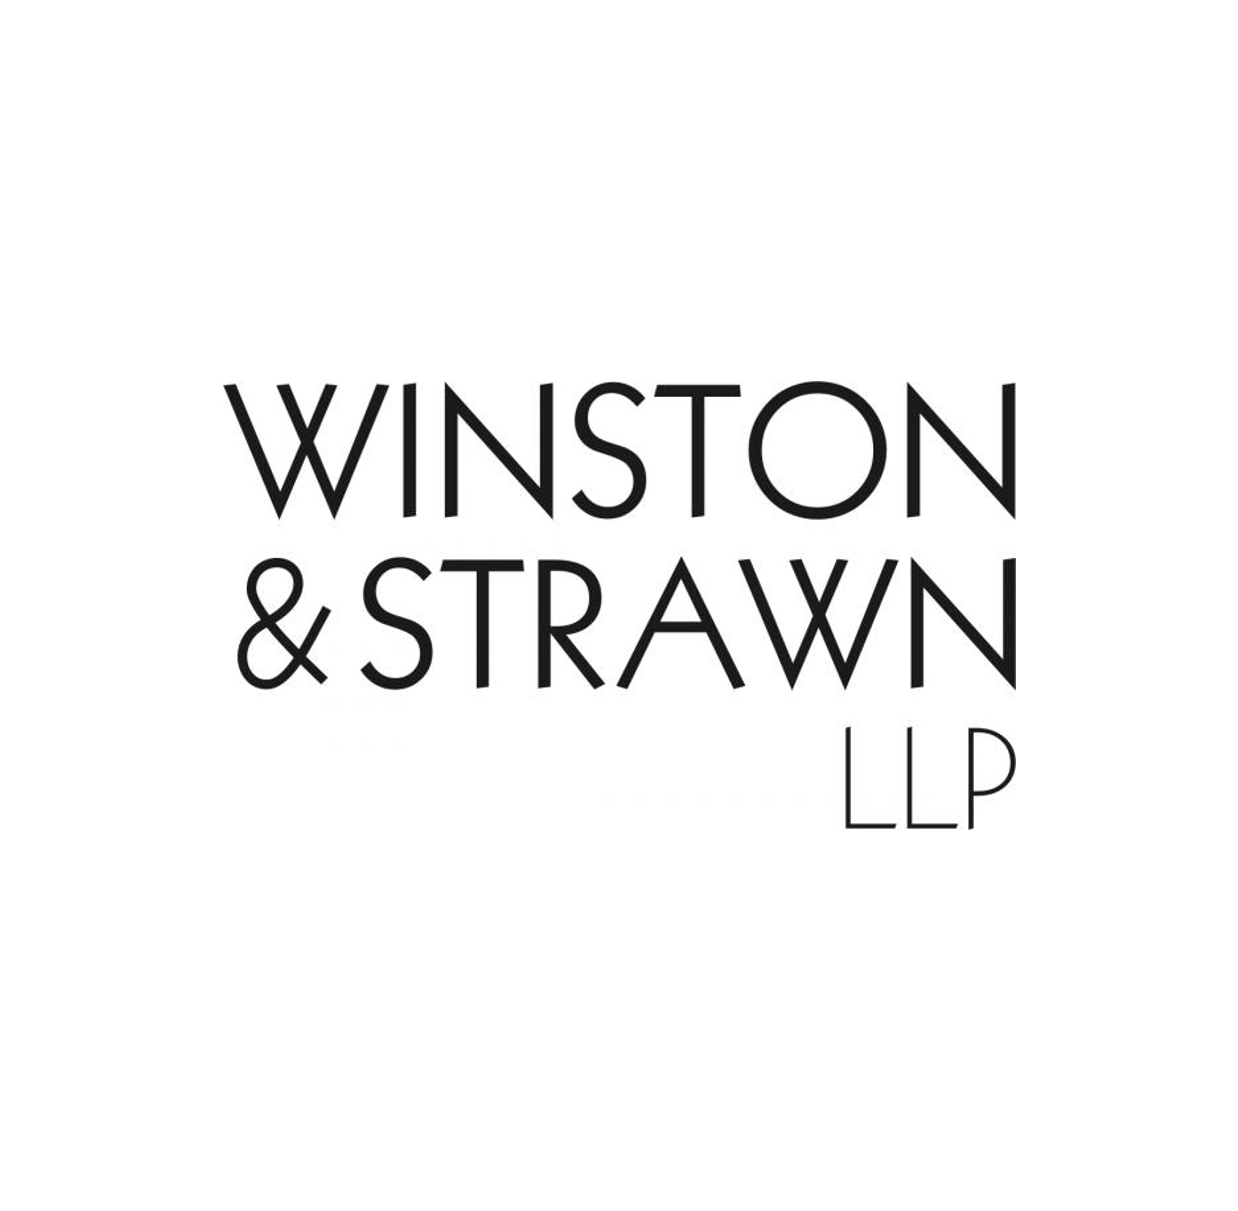 Winston & Strawn